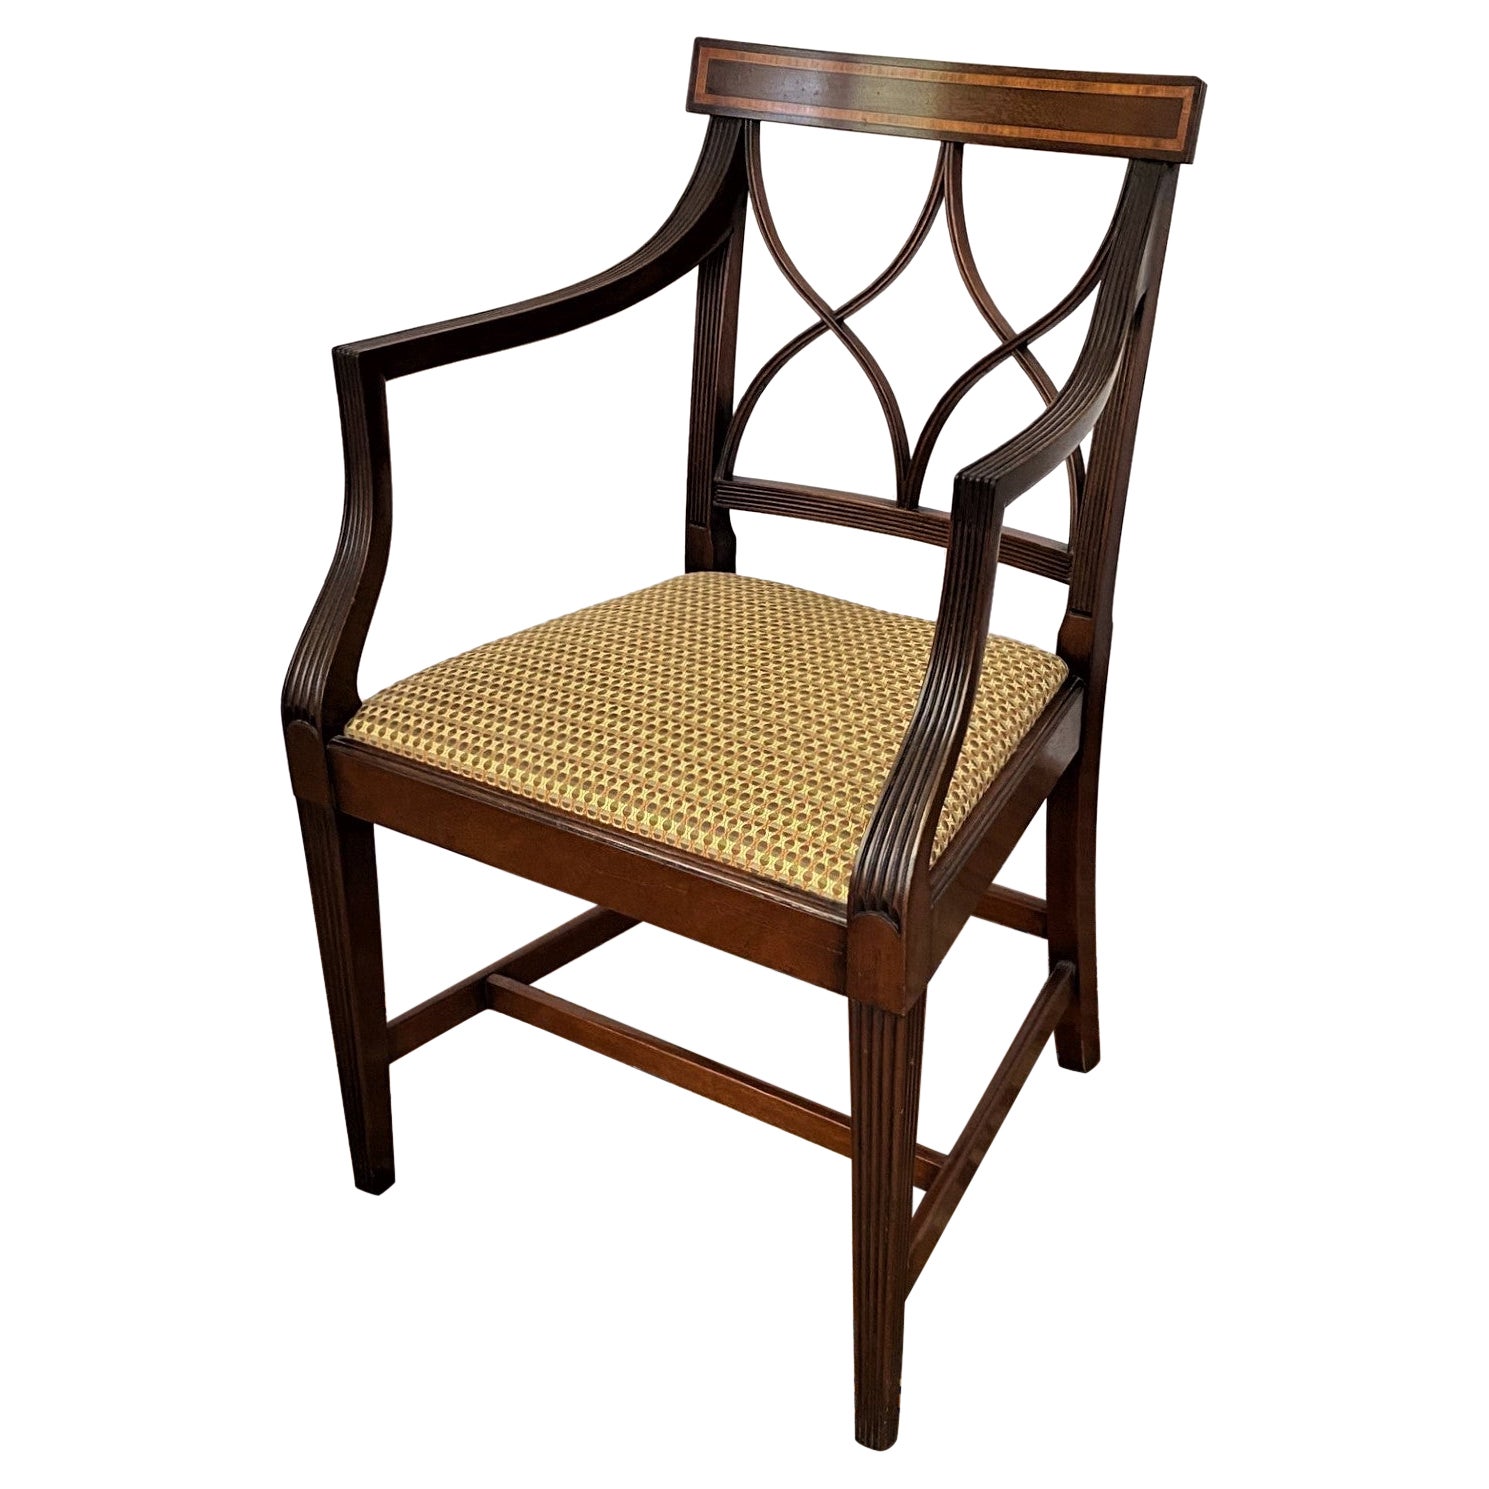 Englischer Mahagoni-Sessel im Sheraton-Stil mit Tulpenholz Inaly. Vorrätig